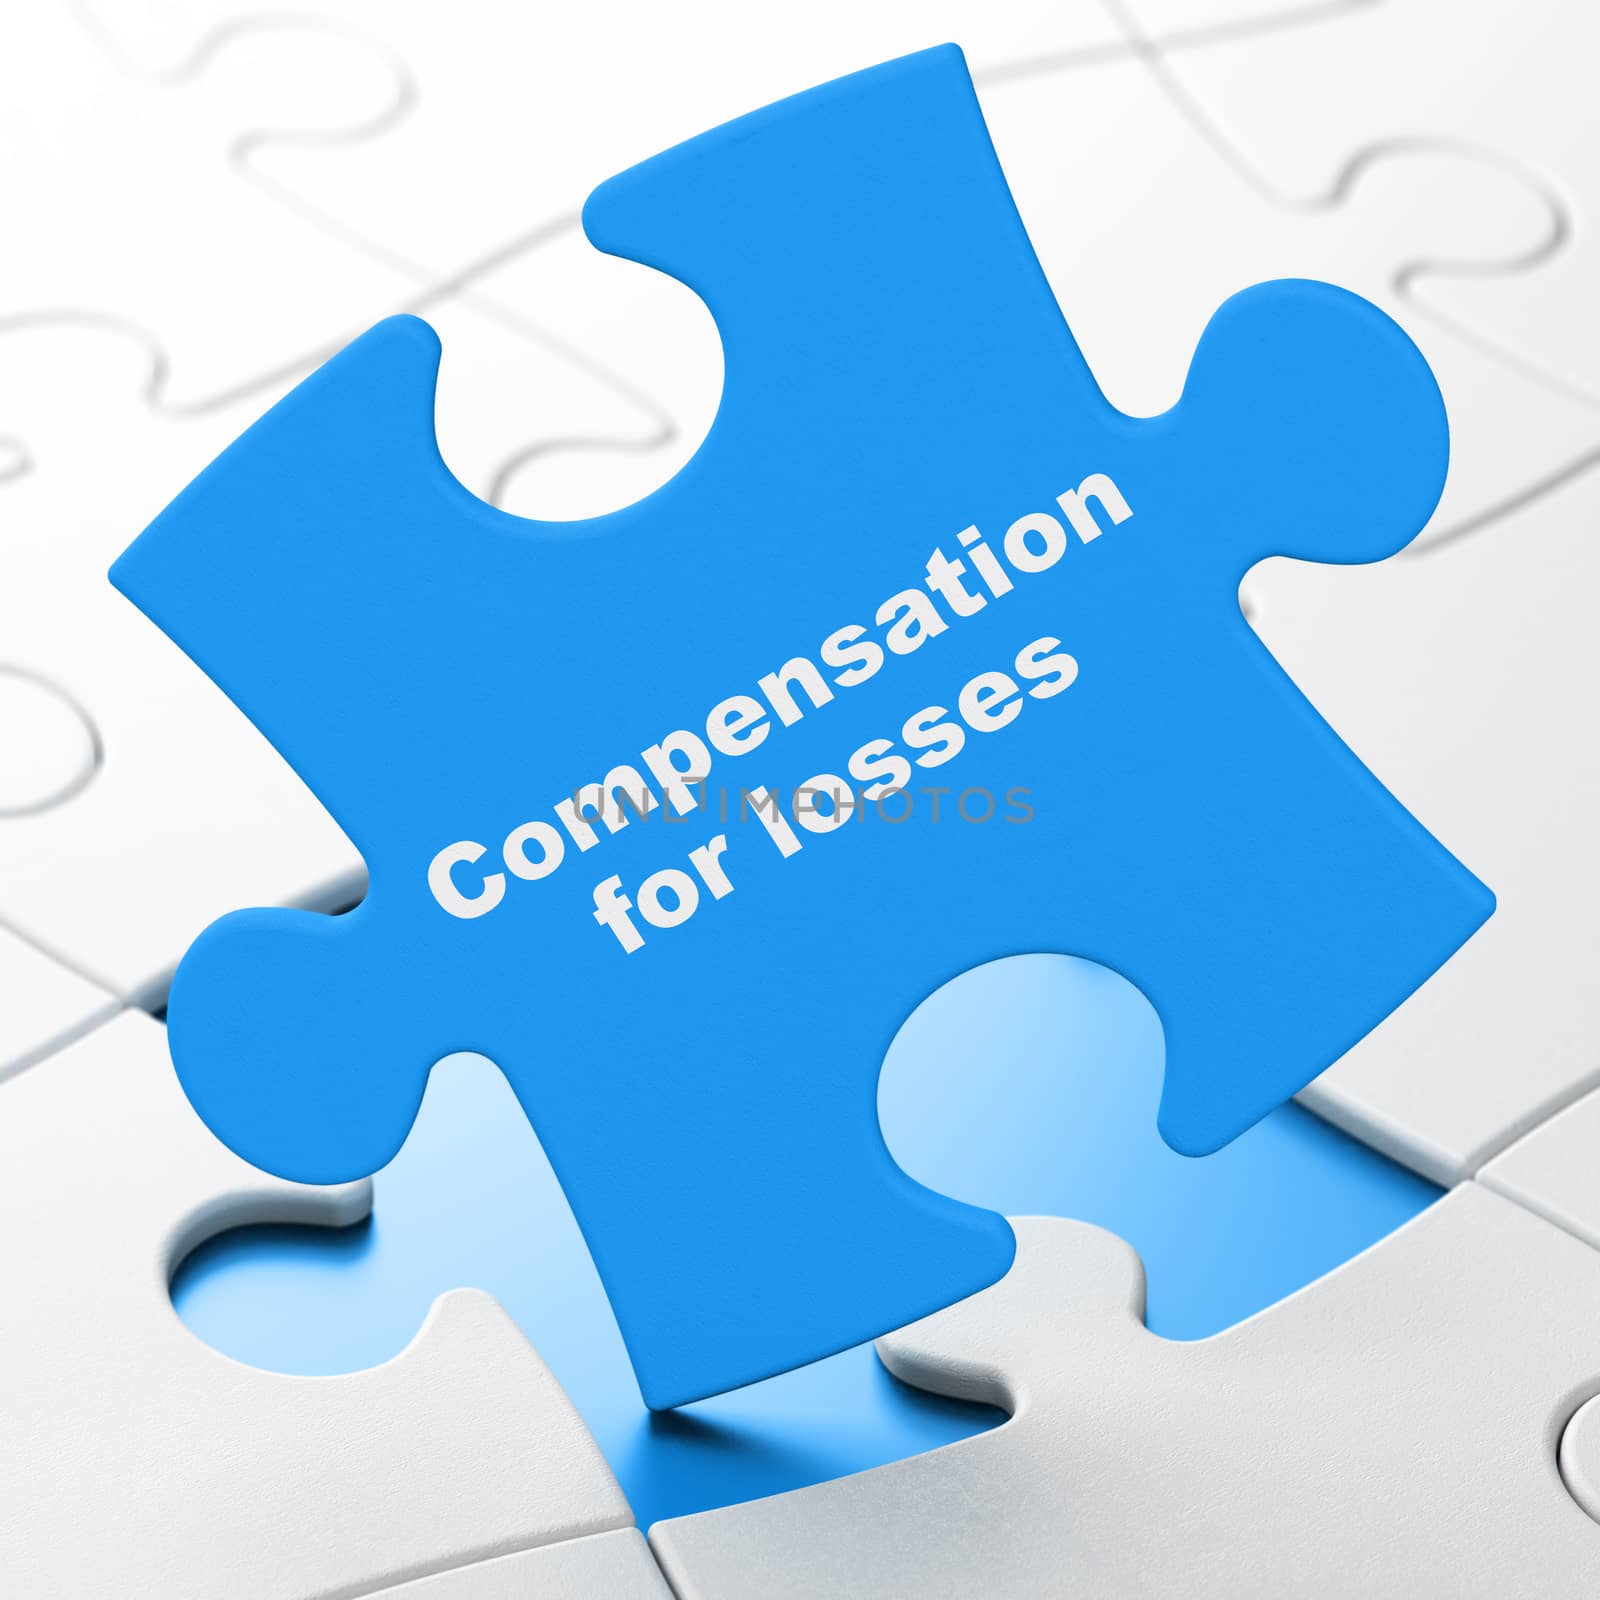 Money concept: Compensation For losses on Blue puzzle pieces background, 3D rendering